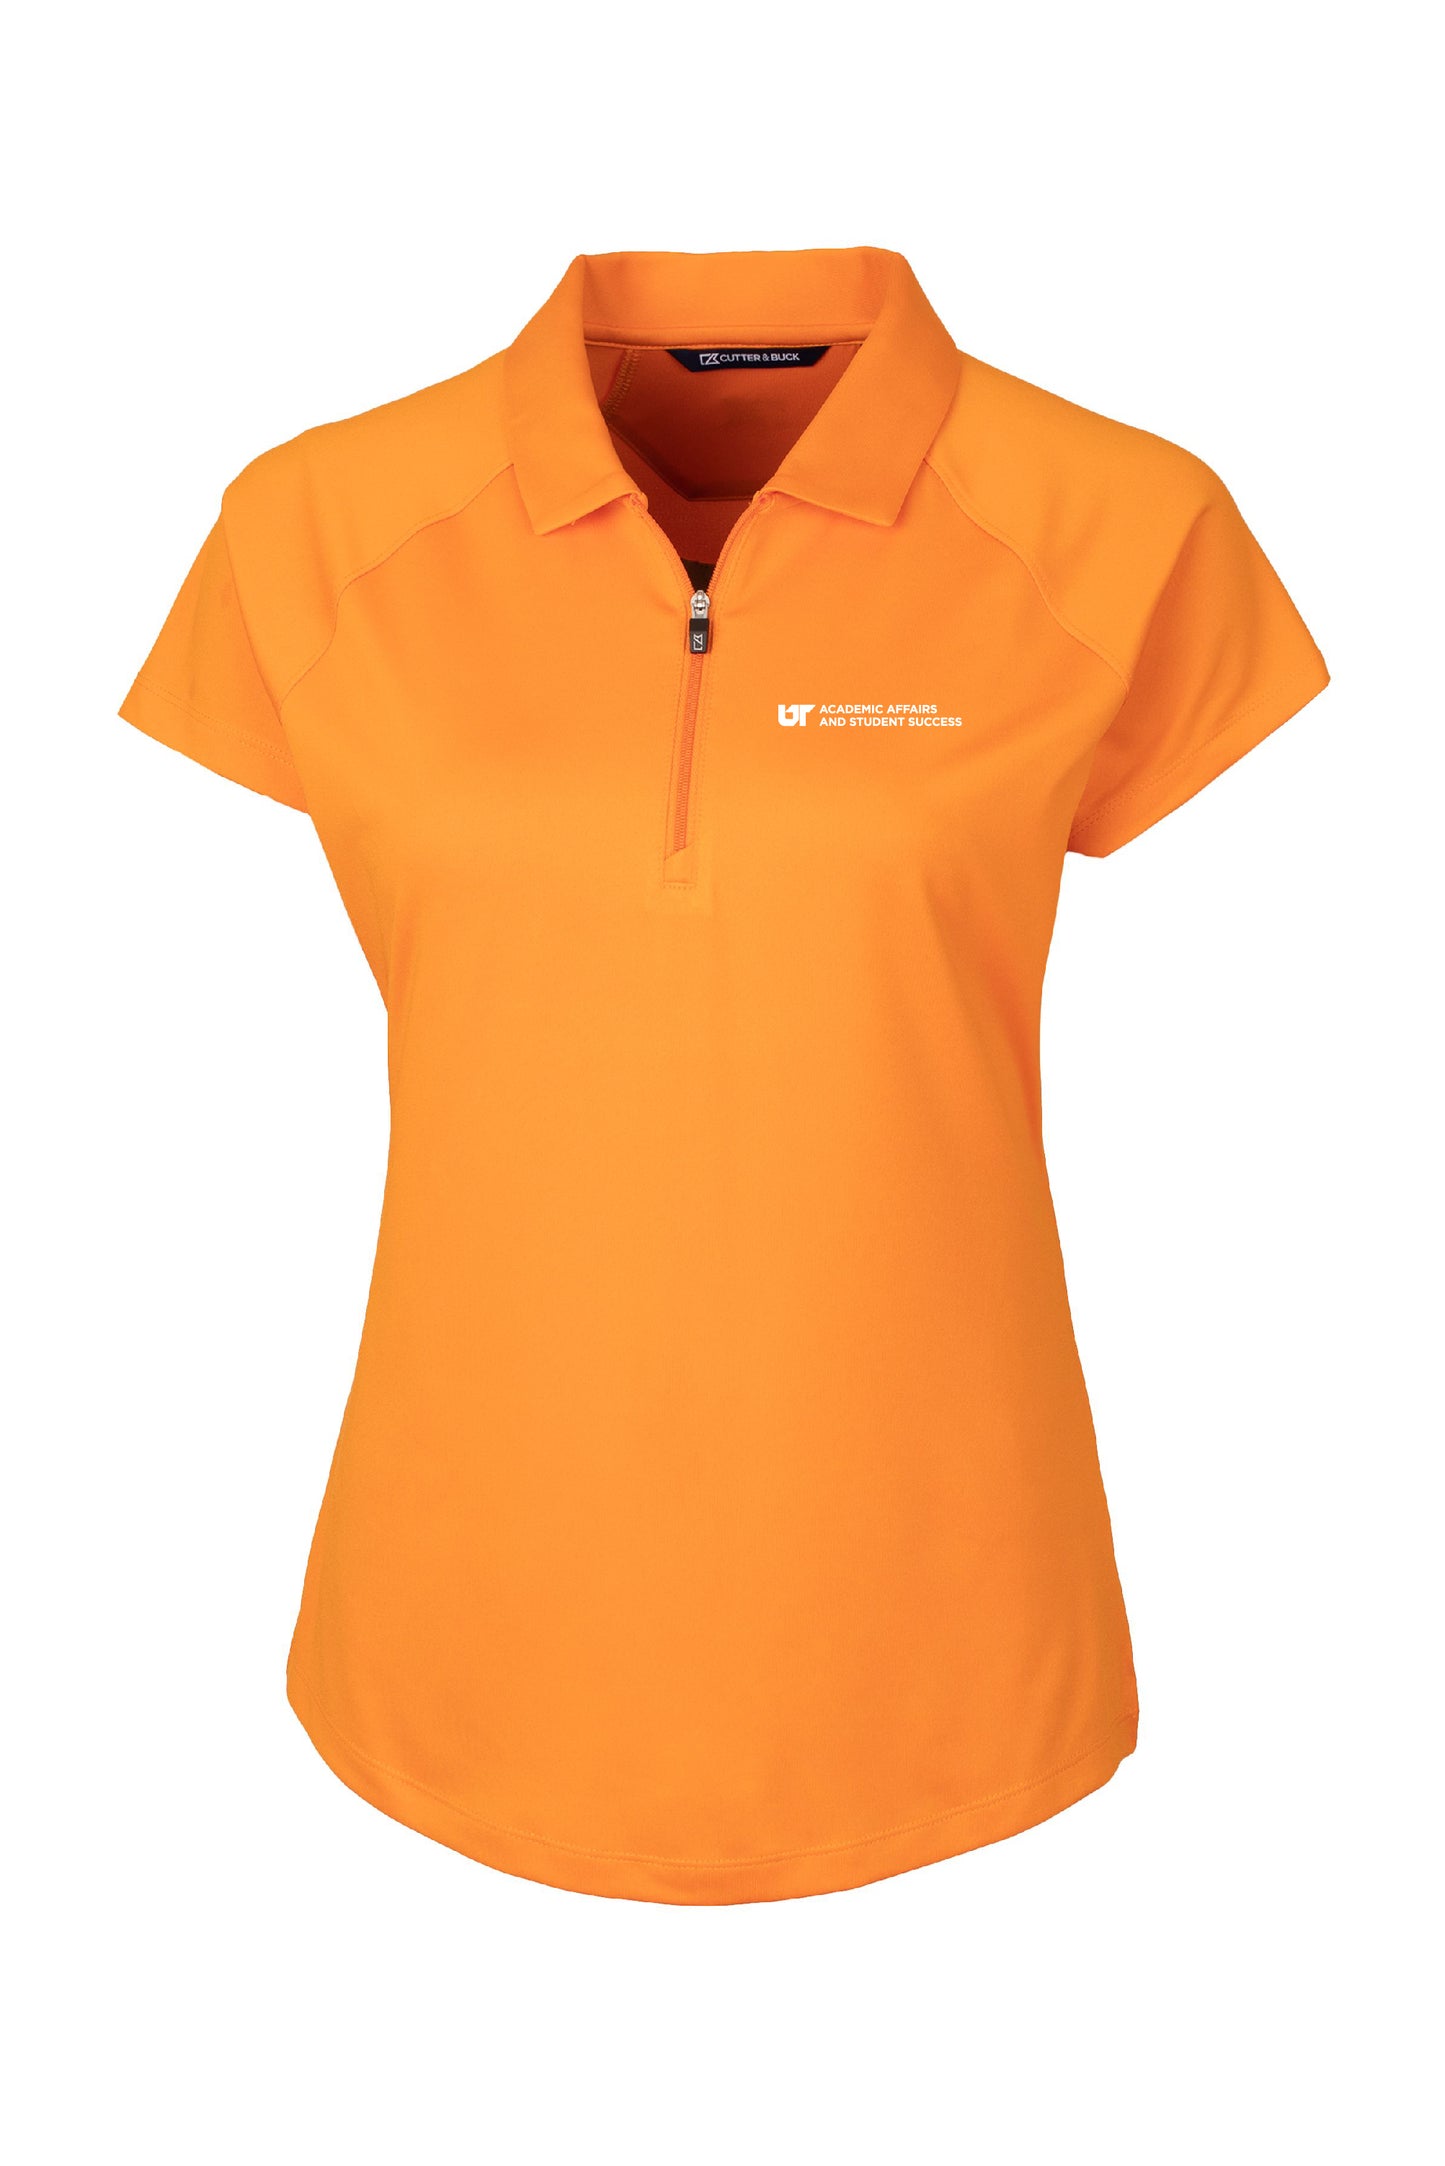 Cutter & Buck Women's Forge Stretch Short Sleeve Polo - Orange